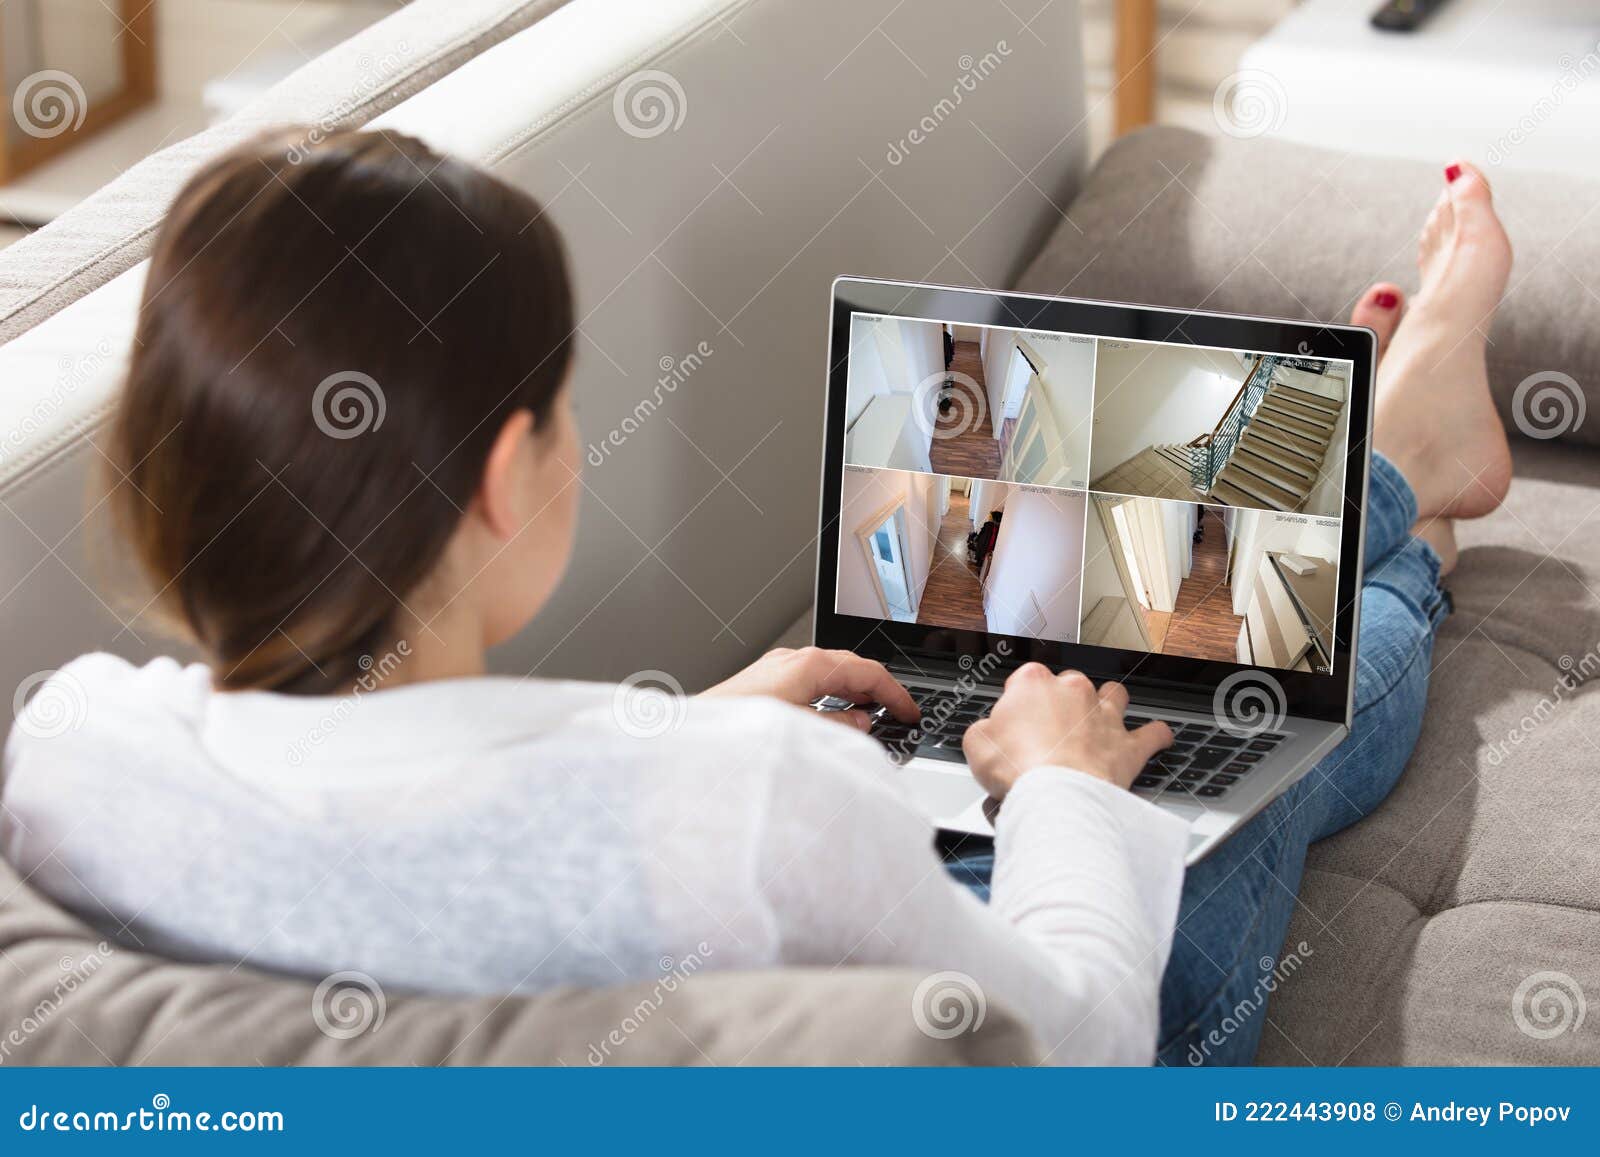 woman monitoring cctv footage on laptop